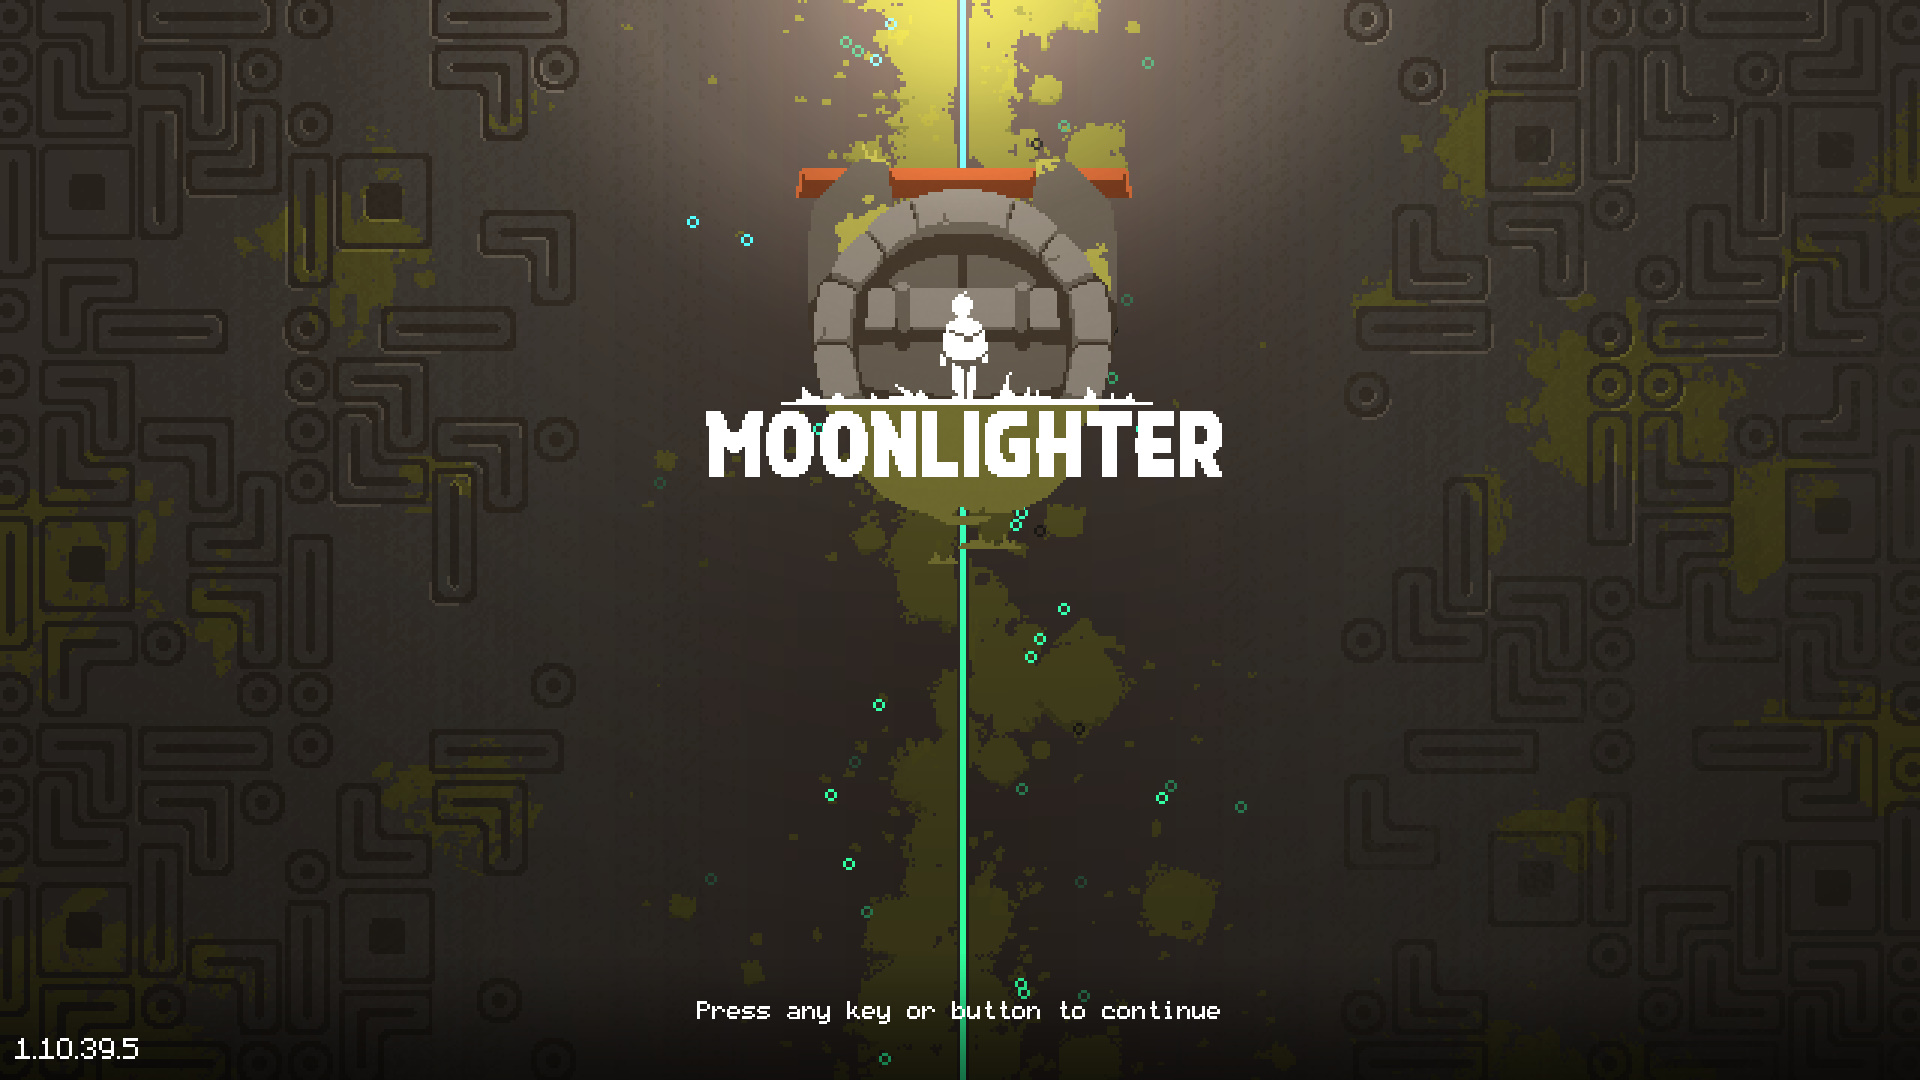 instal the last version for ipod Moonlighter